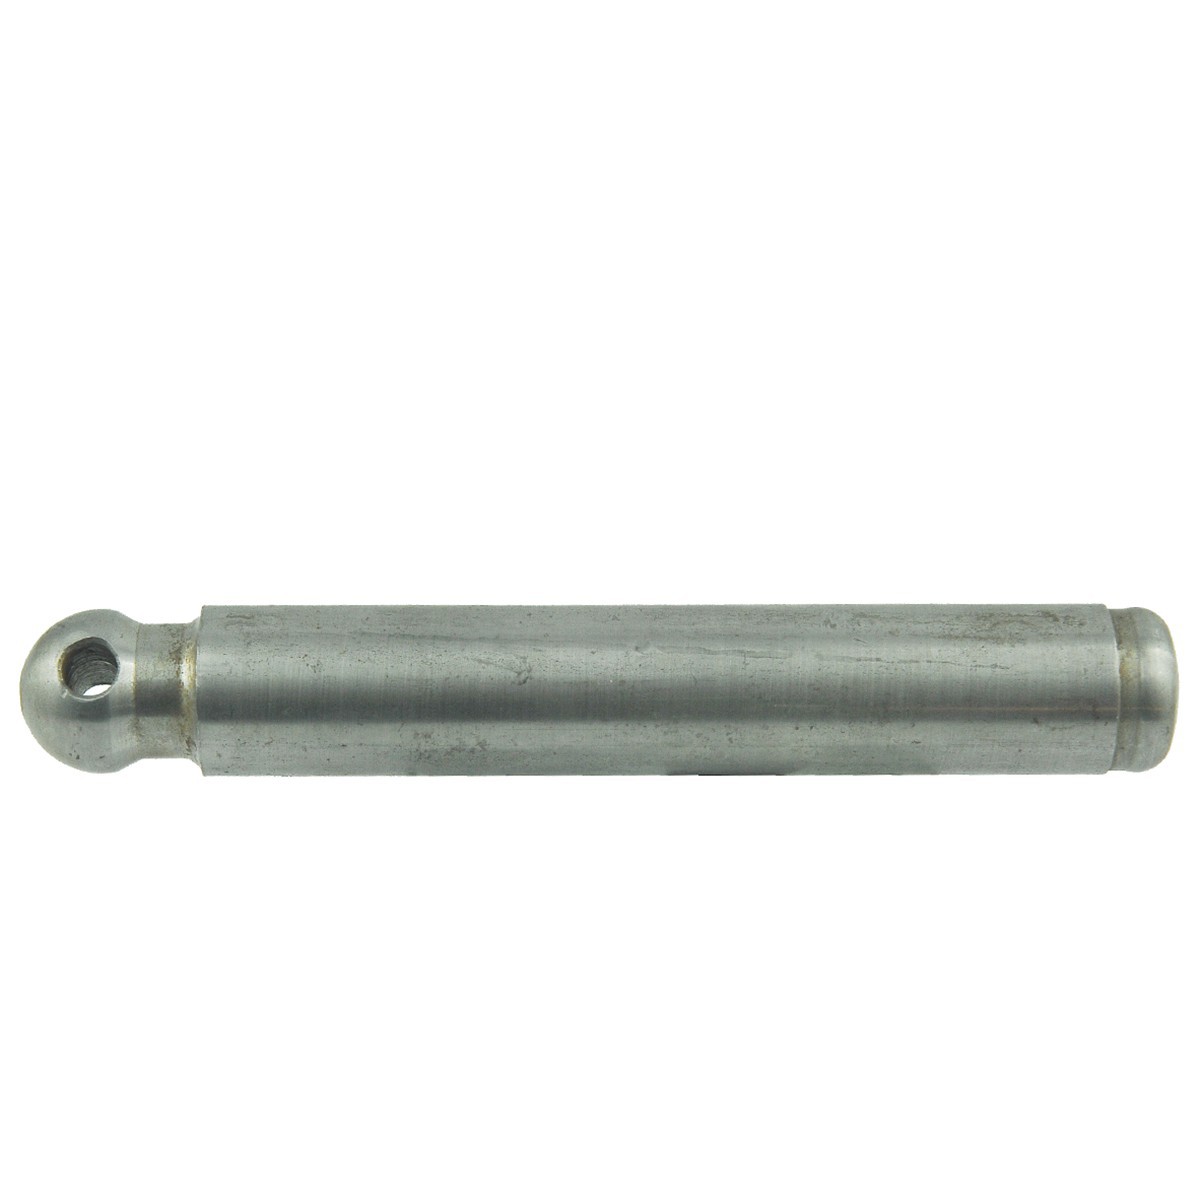 Hydraulic piston pusher / Ø25 x 170 mm / Kubota L3408 / 31351-37320 / 5-25-117-04